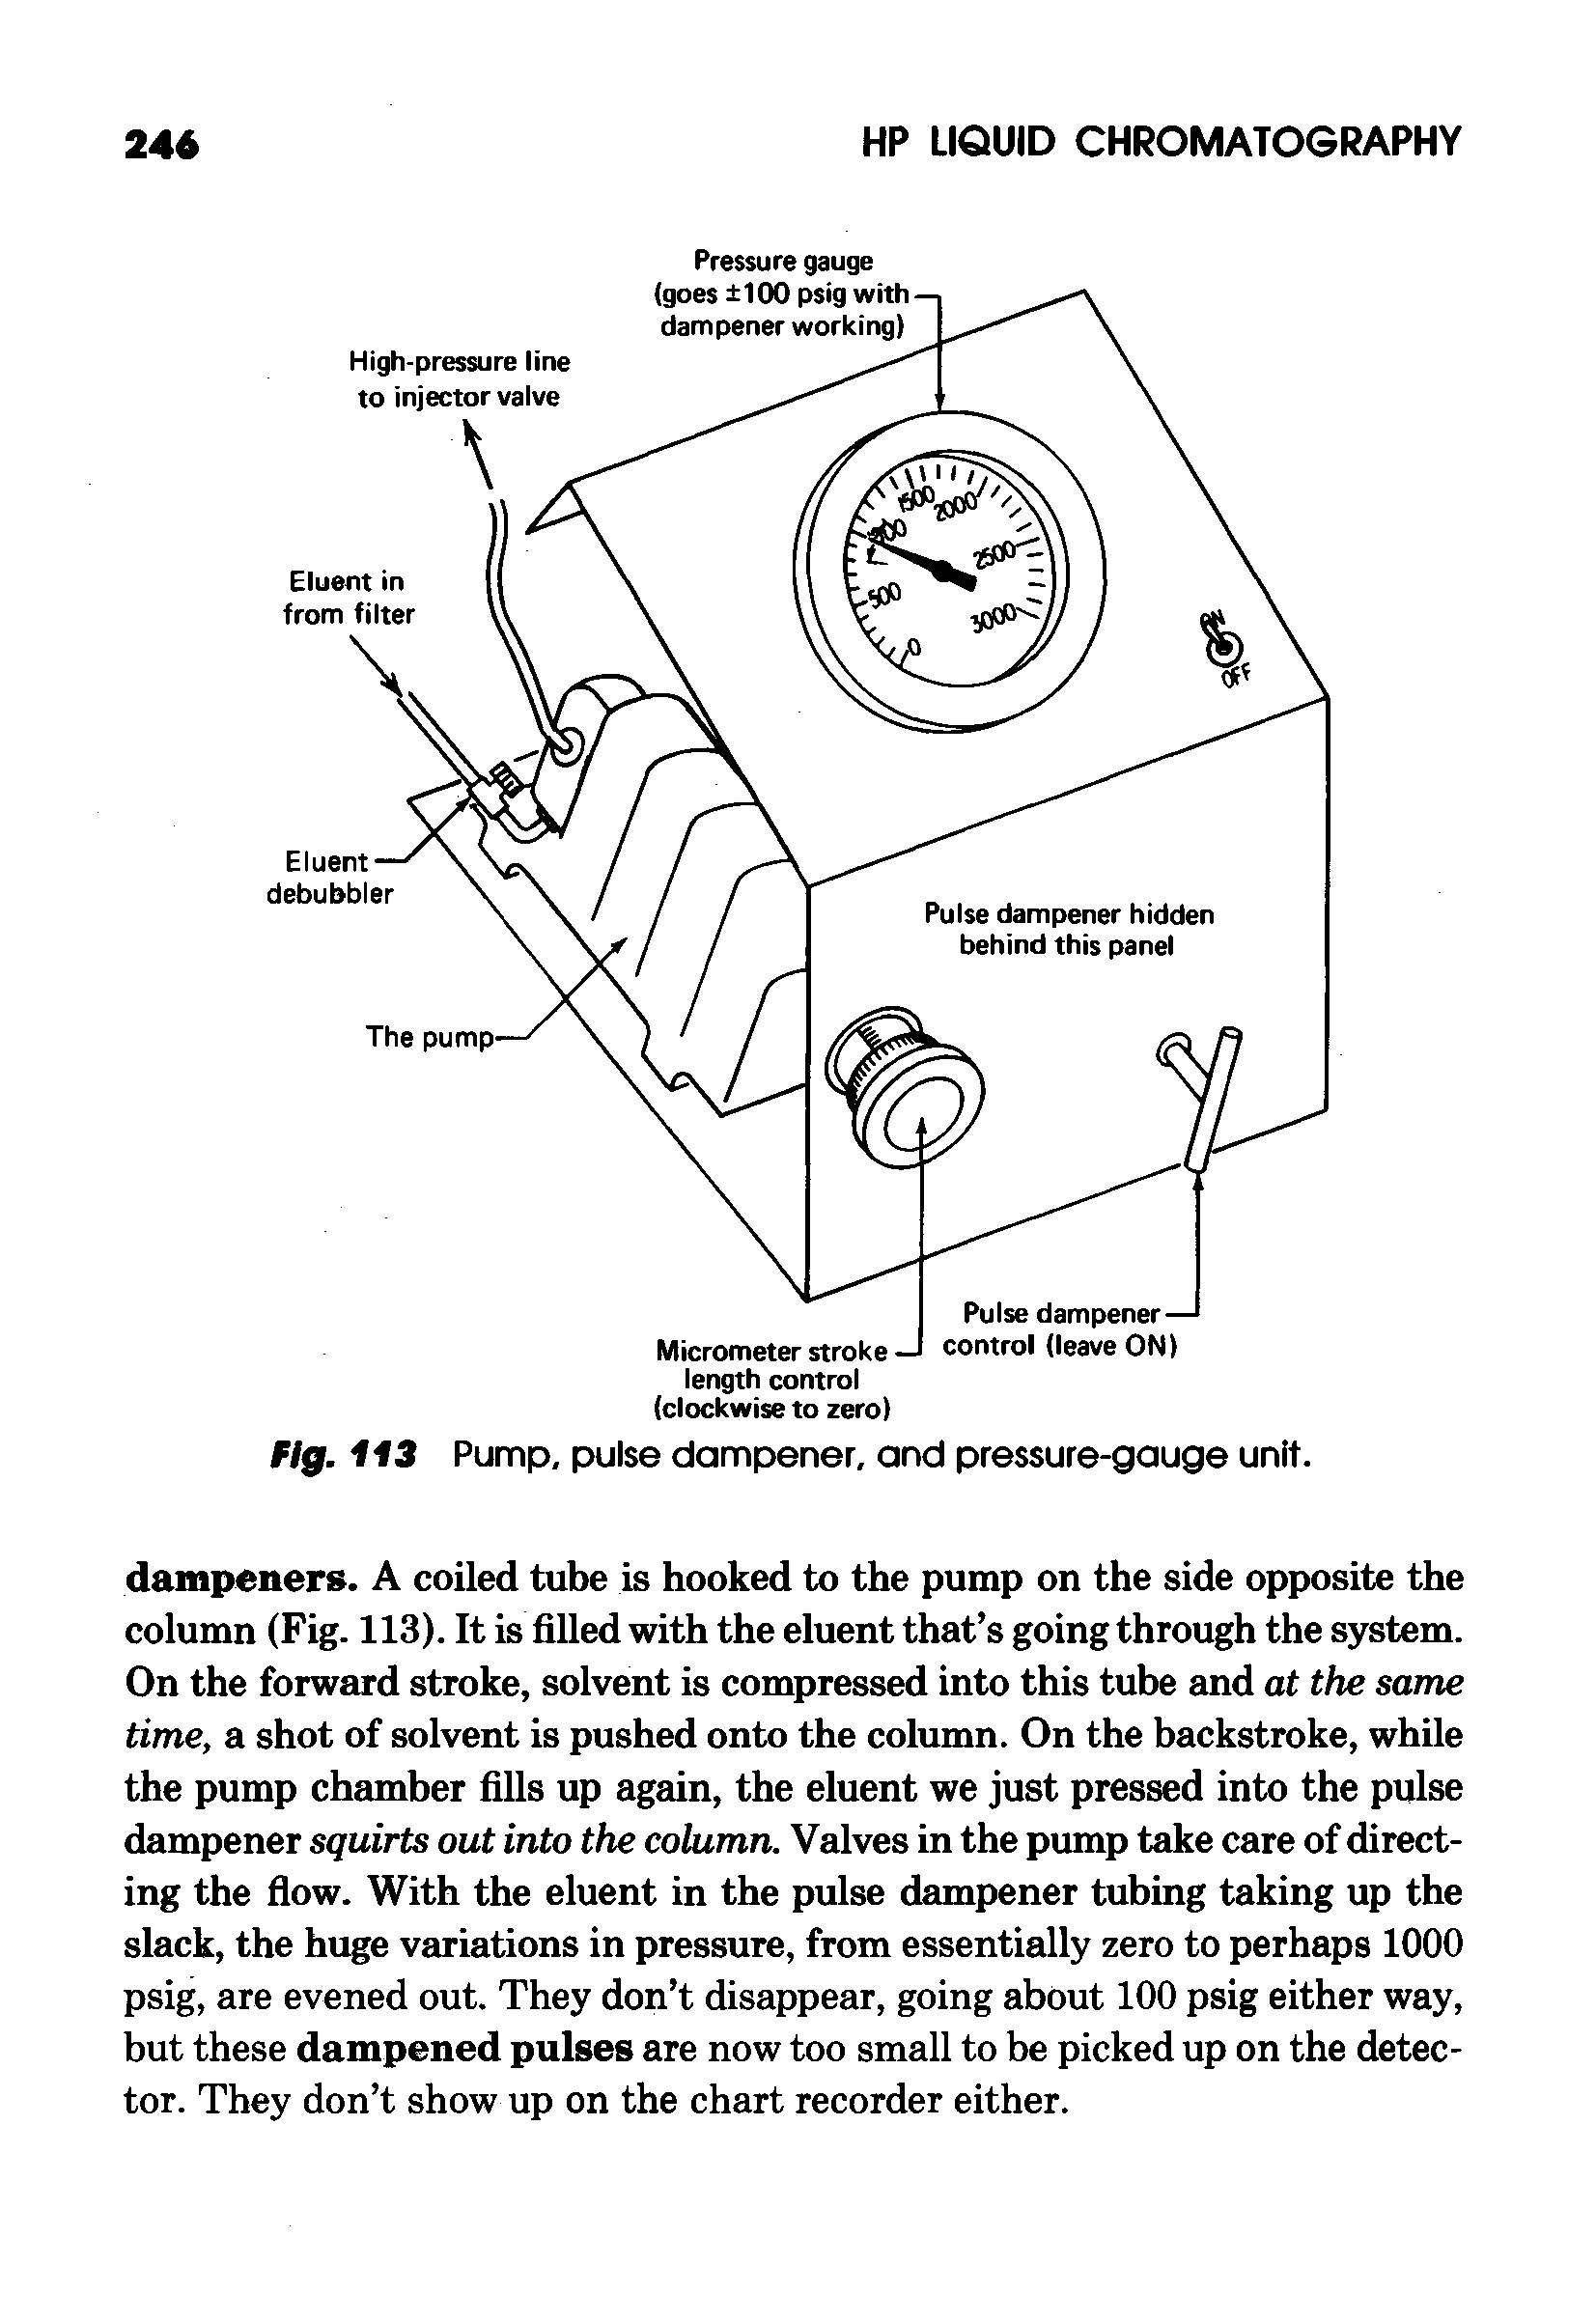 Fig. 113 Pump, pulse dampener, and pressure-gauge unit.